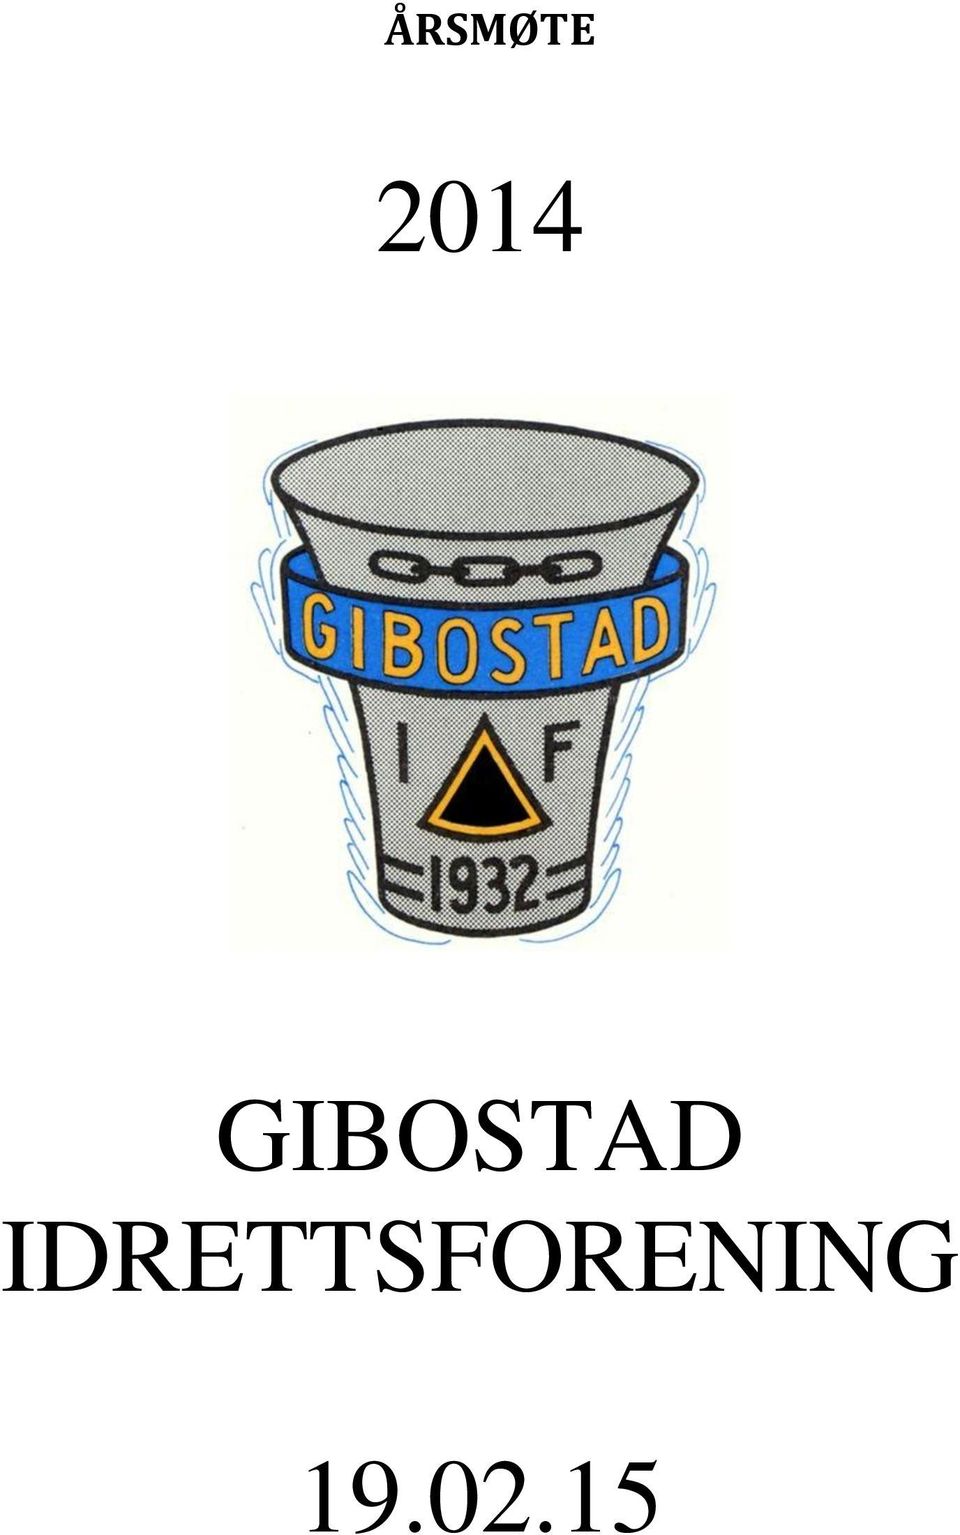 GIBOSTAD